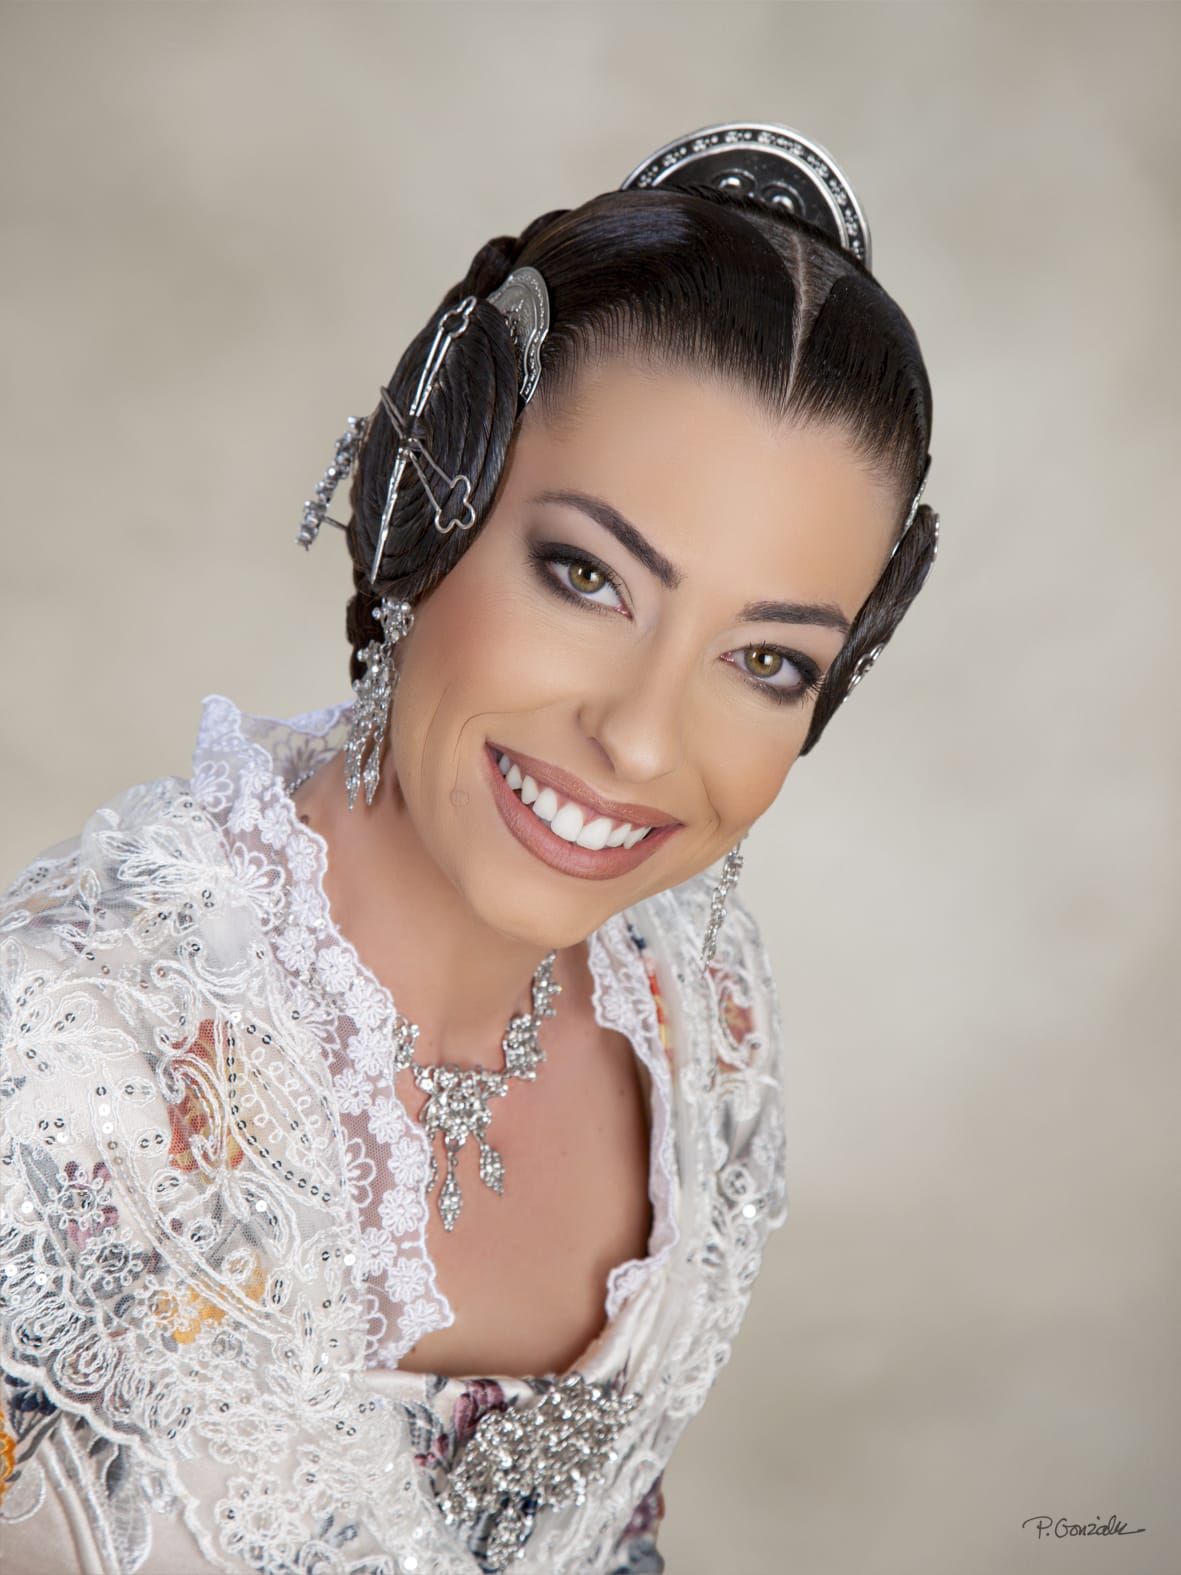 CAMPANAR. Lorena Lujan Parra (Castielfabib-Marques de San Juan)